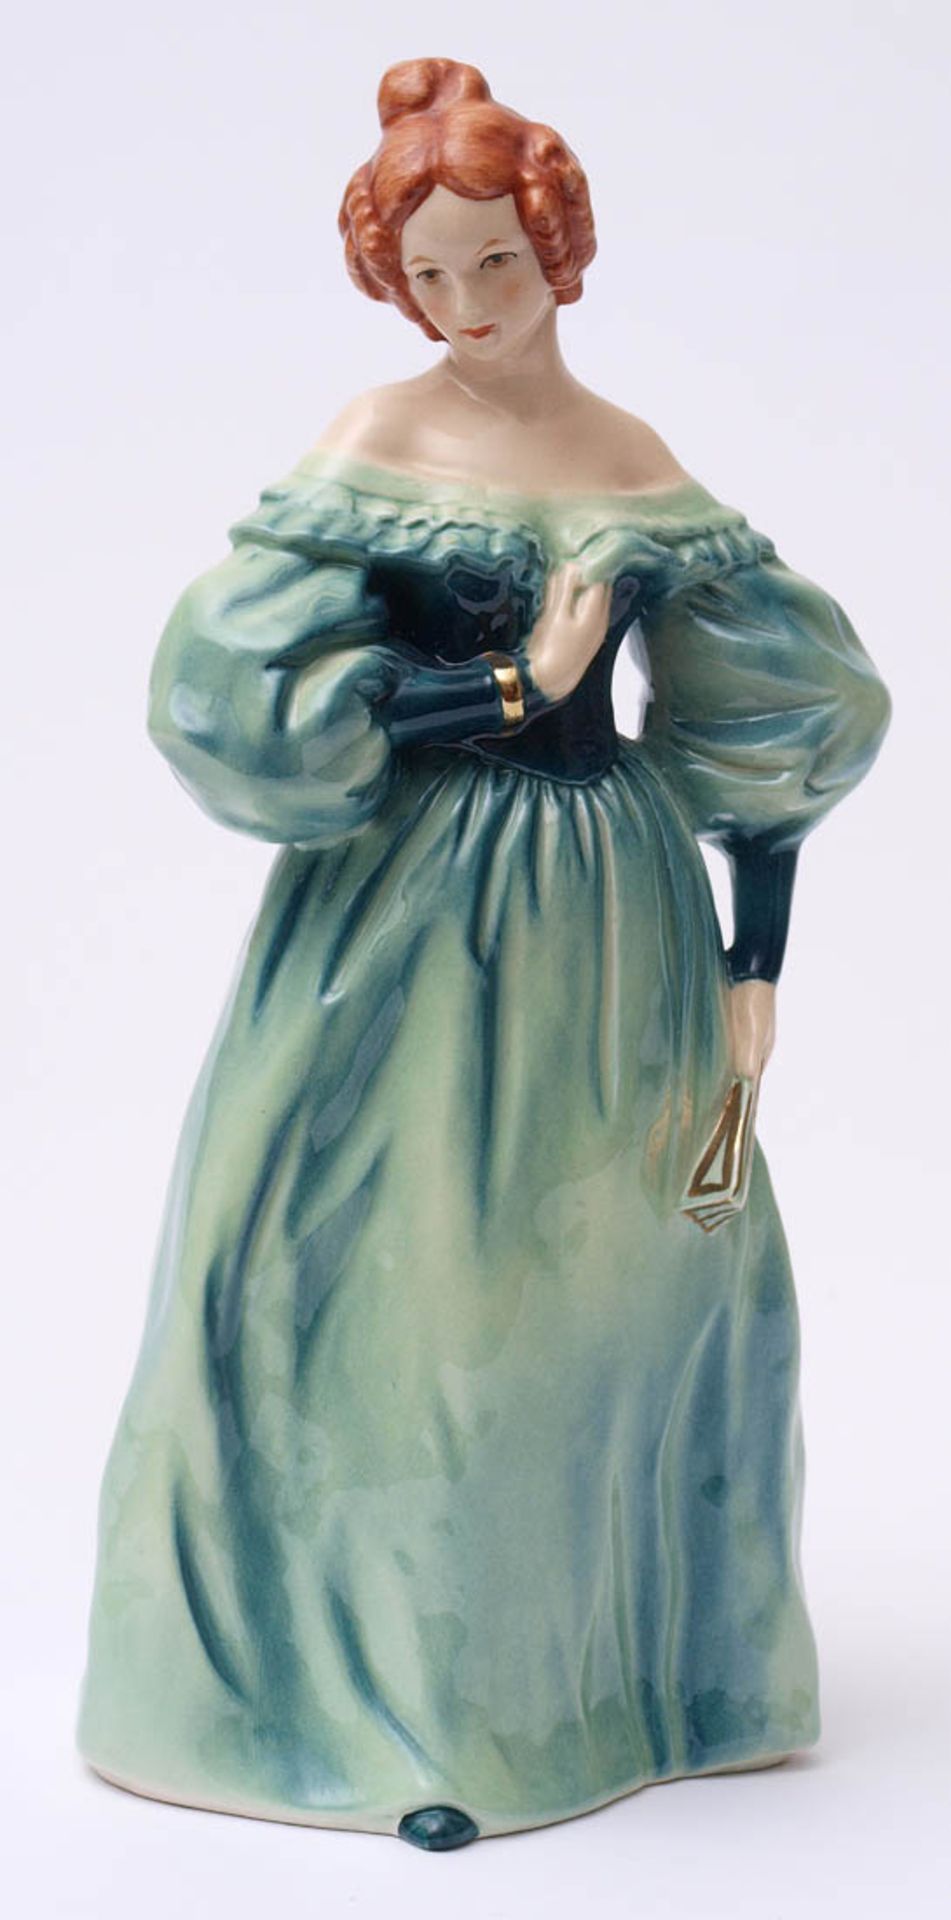 Figurine, Goebel Junge Frau in bodenlangem Abendkleid. Pressmarke 16 285 21, blaue Bodenmarke. H.